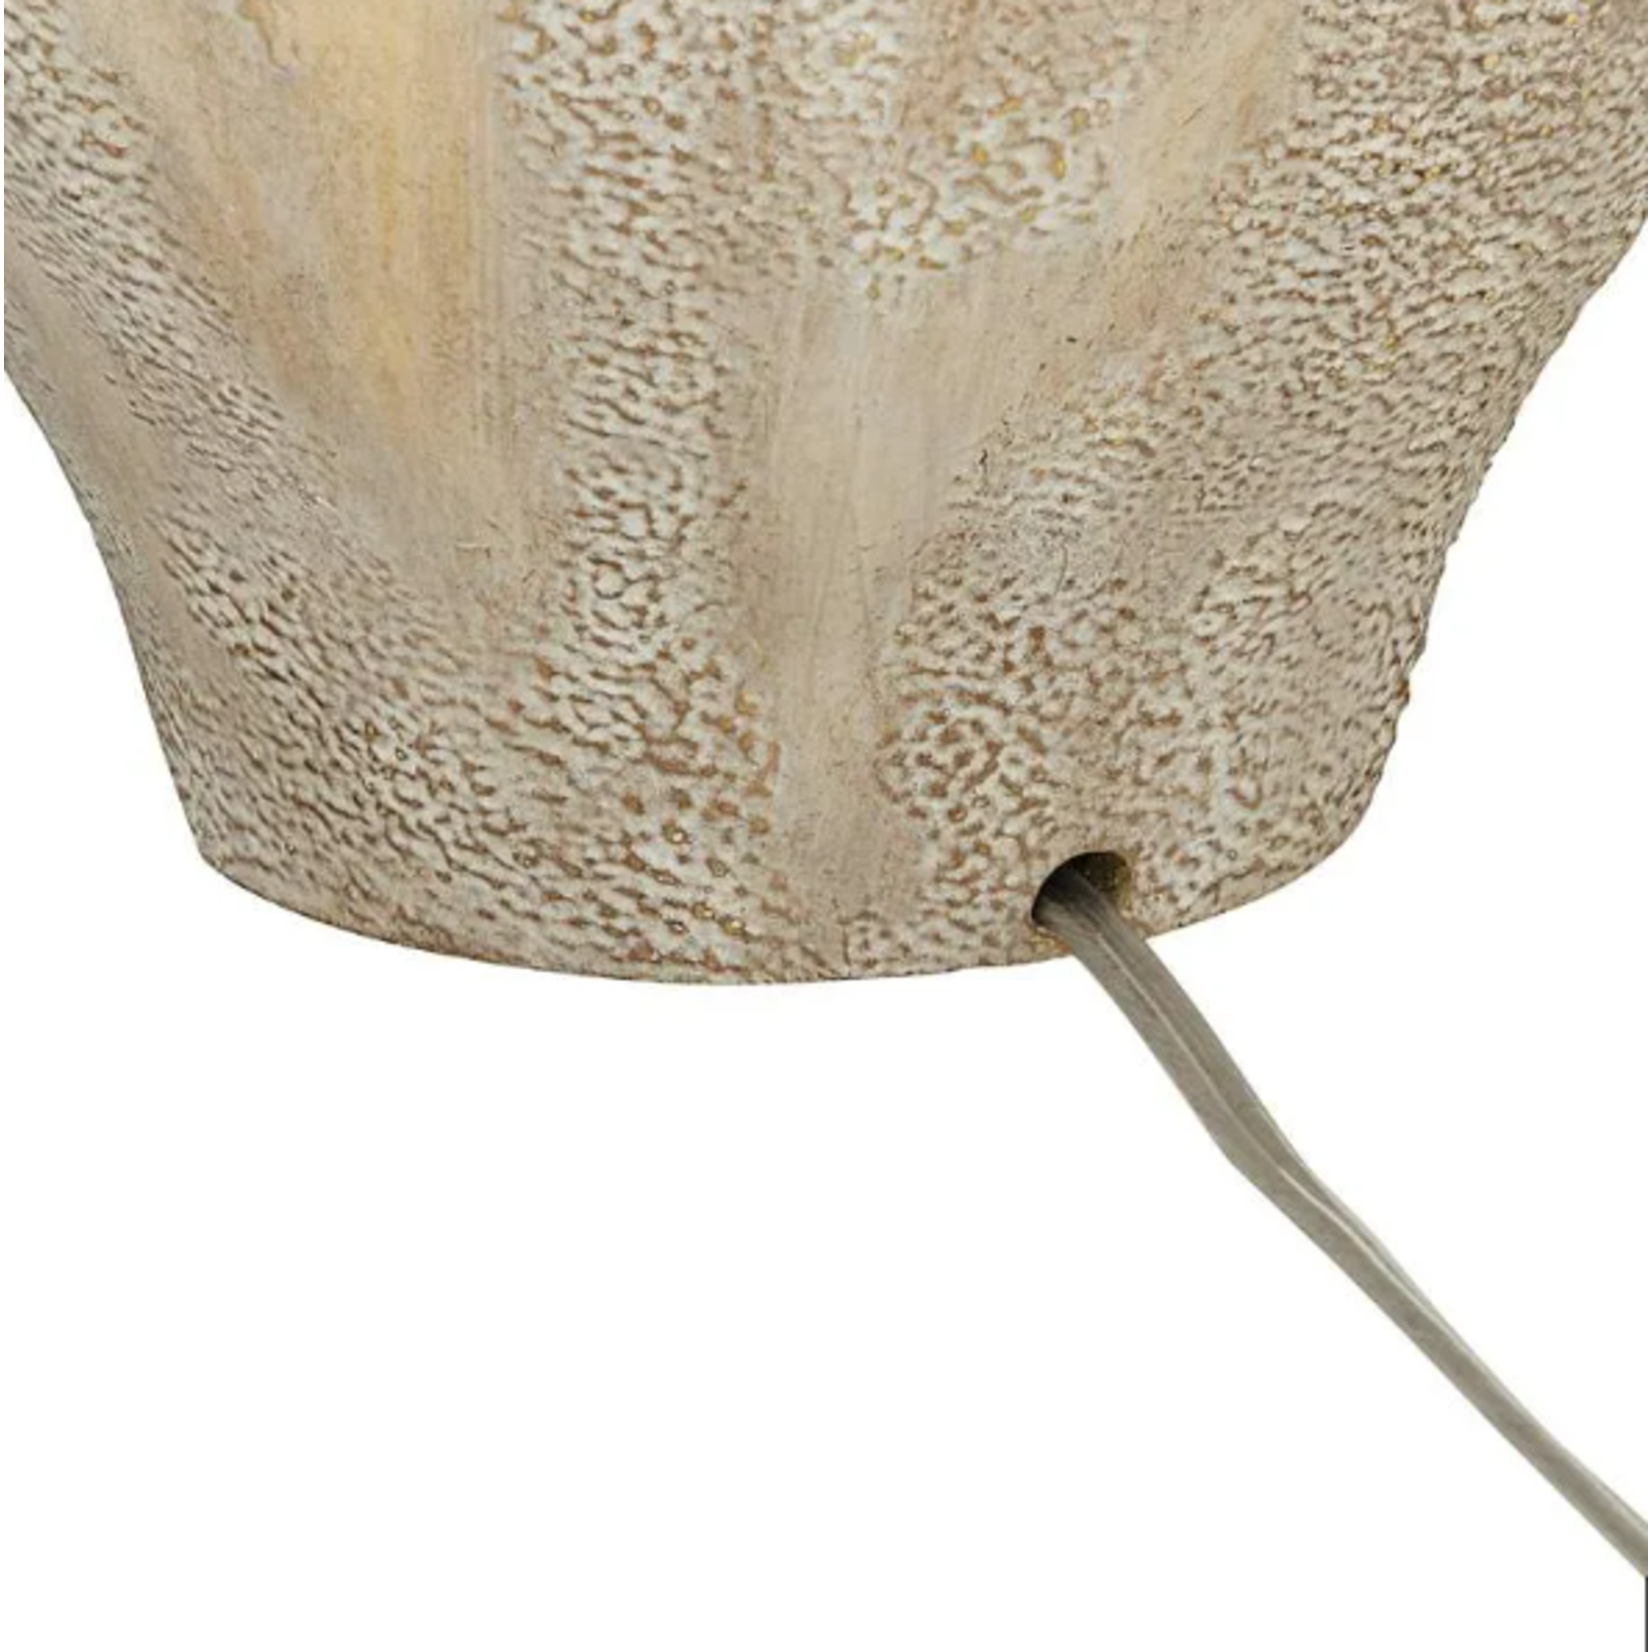 Mickler & Co. Petula Table Lamp